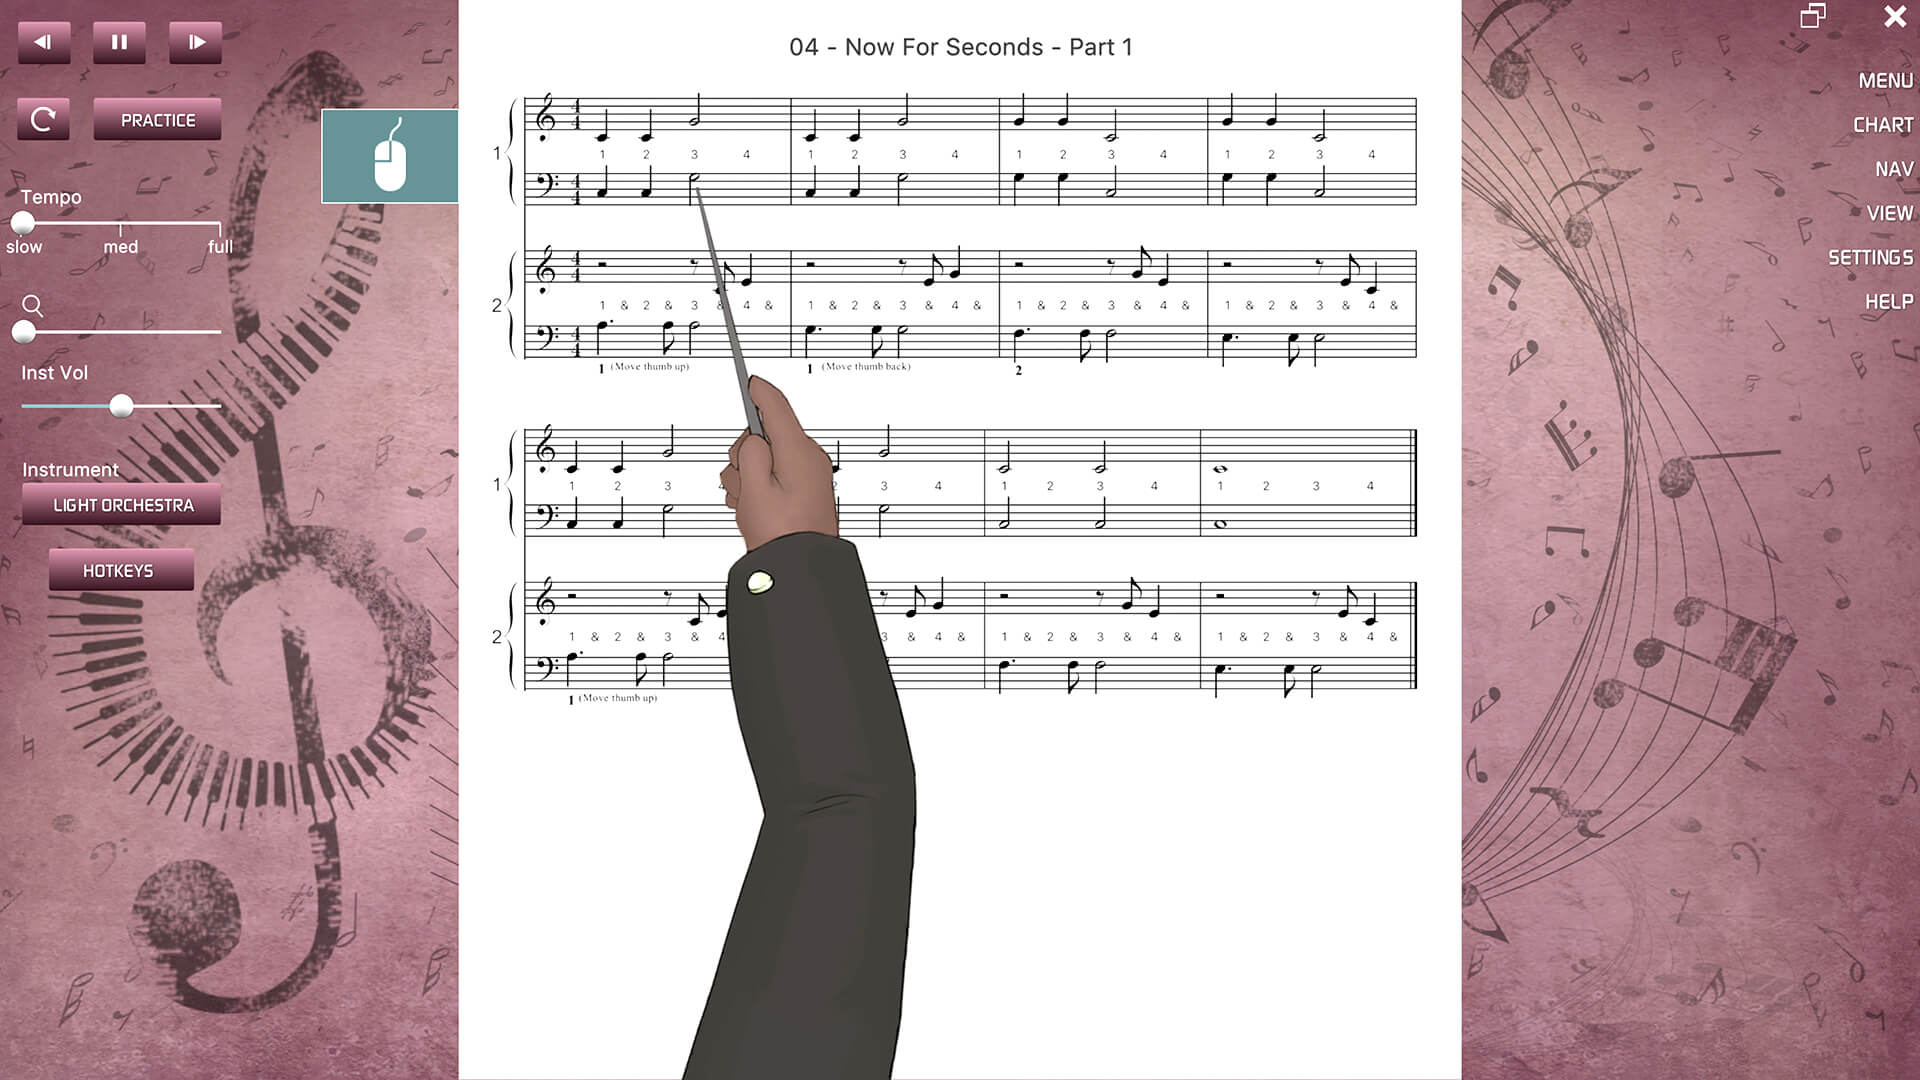 Musiah piano lessons app screenshot showing how to read sheet music